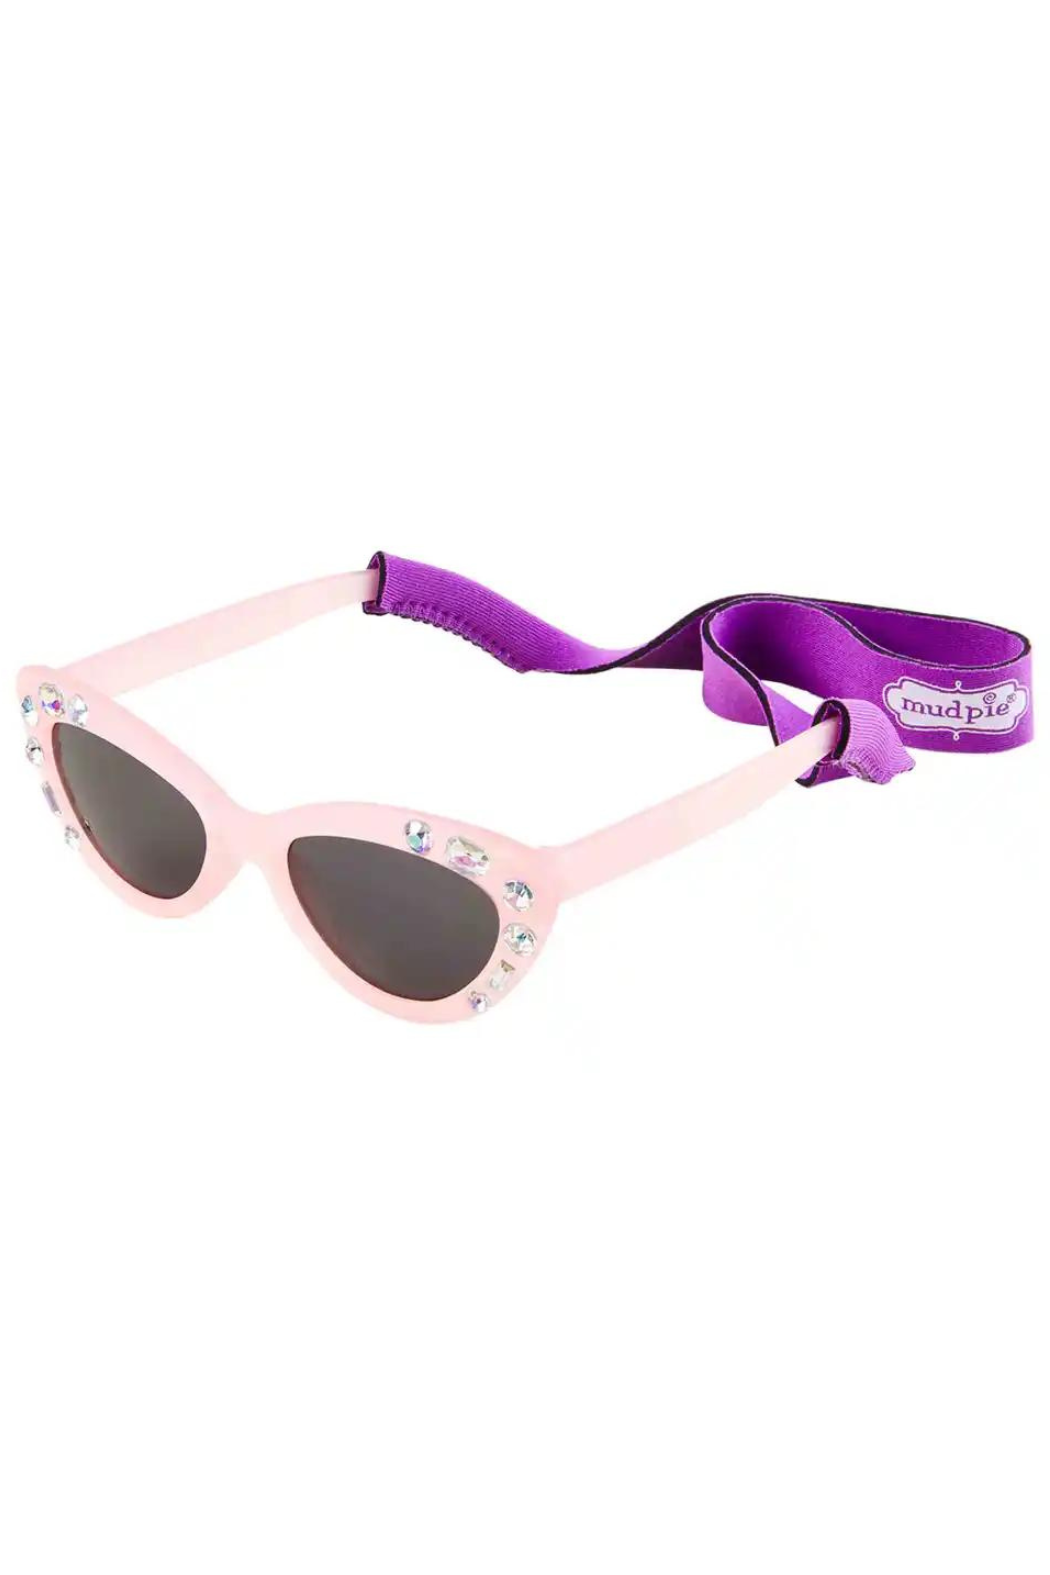 Mud Pie Pink Hat & Sunglasses Set